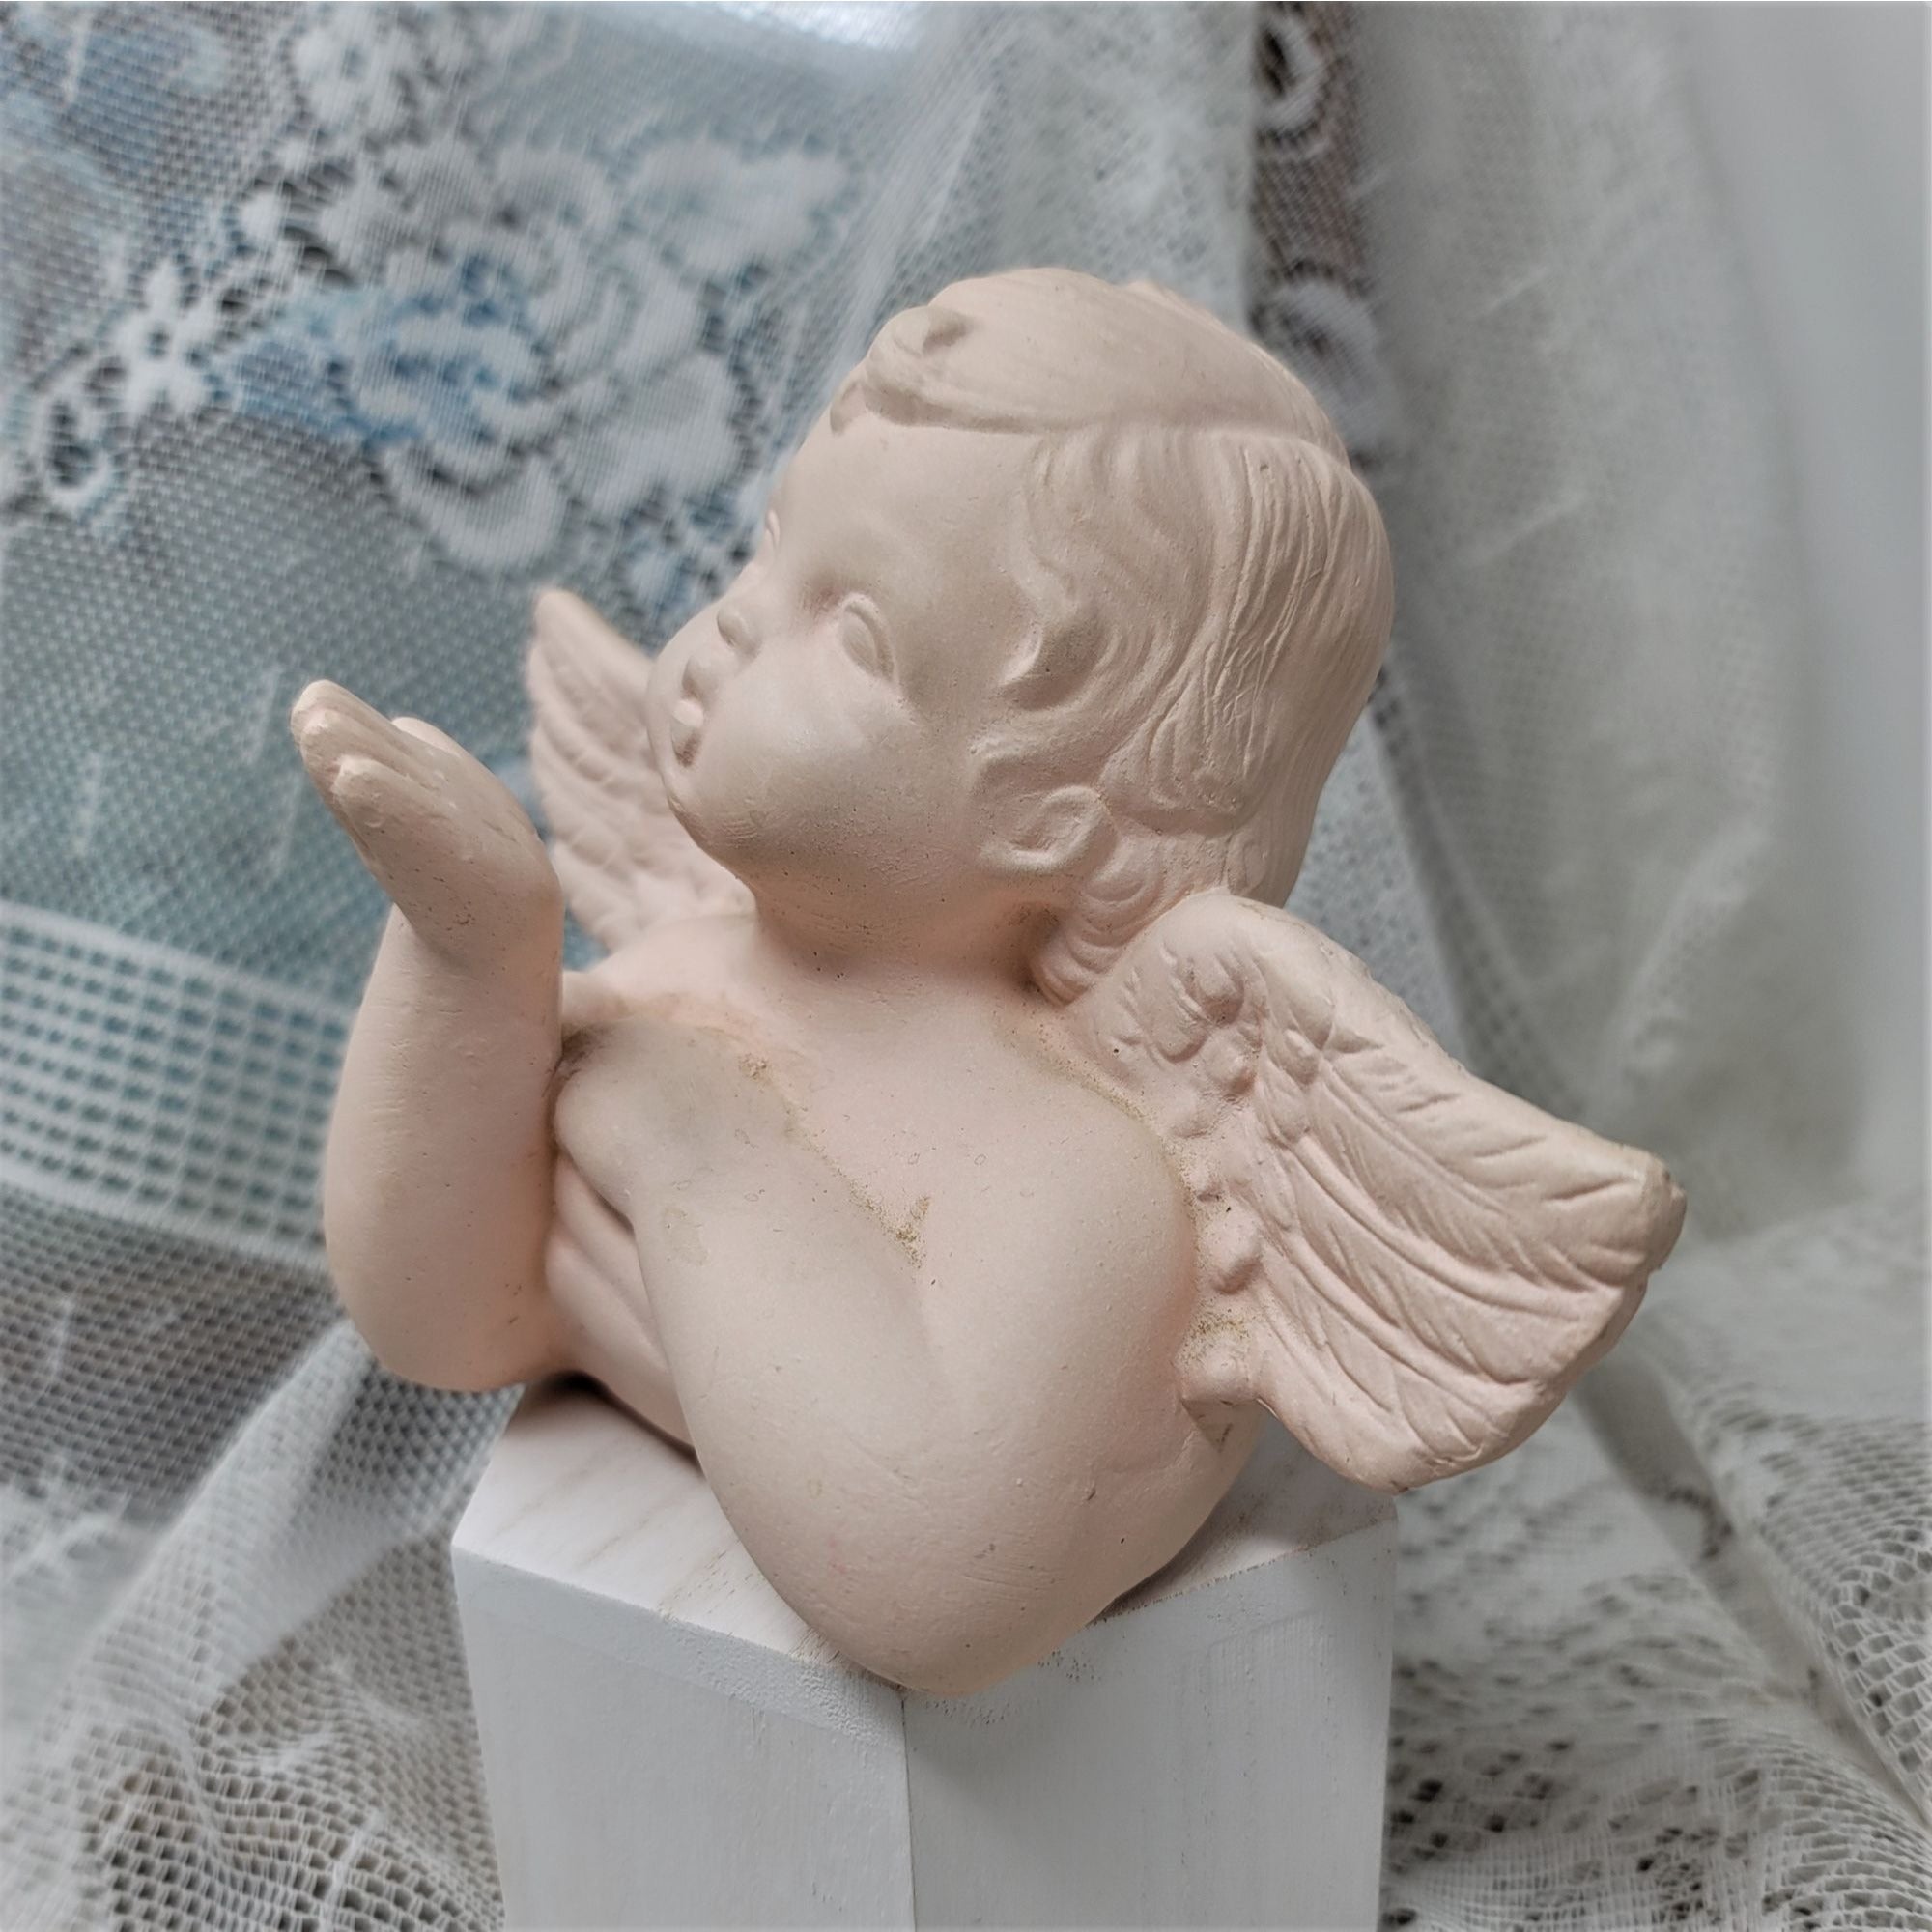 Heavenly Angel Figurine Blowing a Kiss